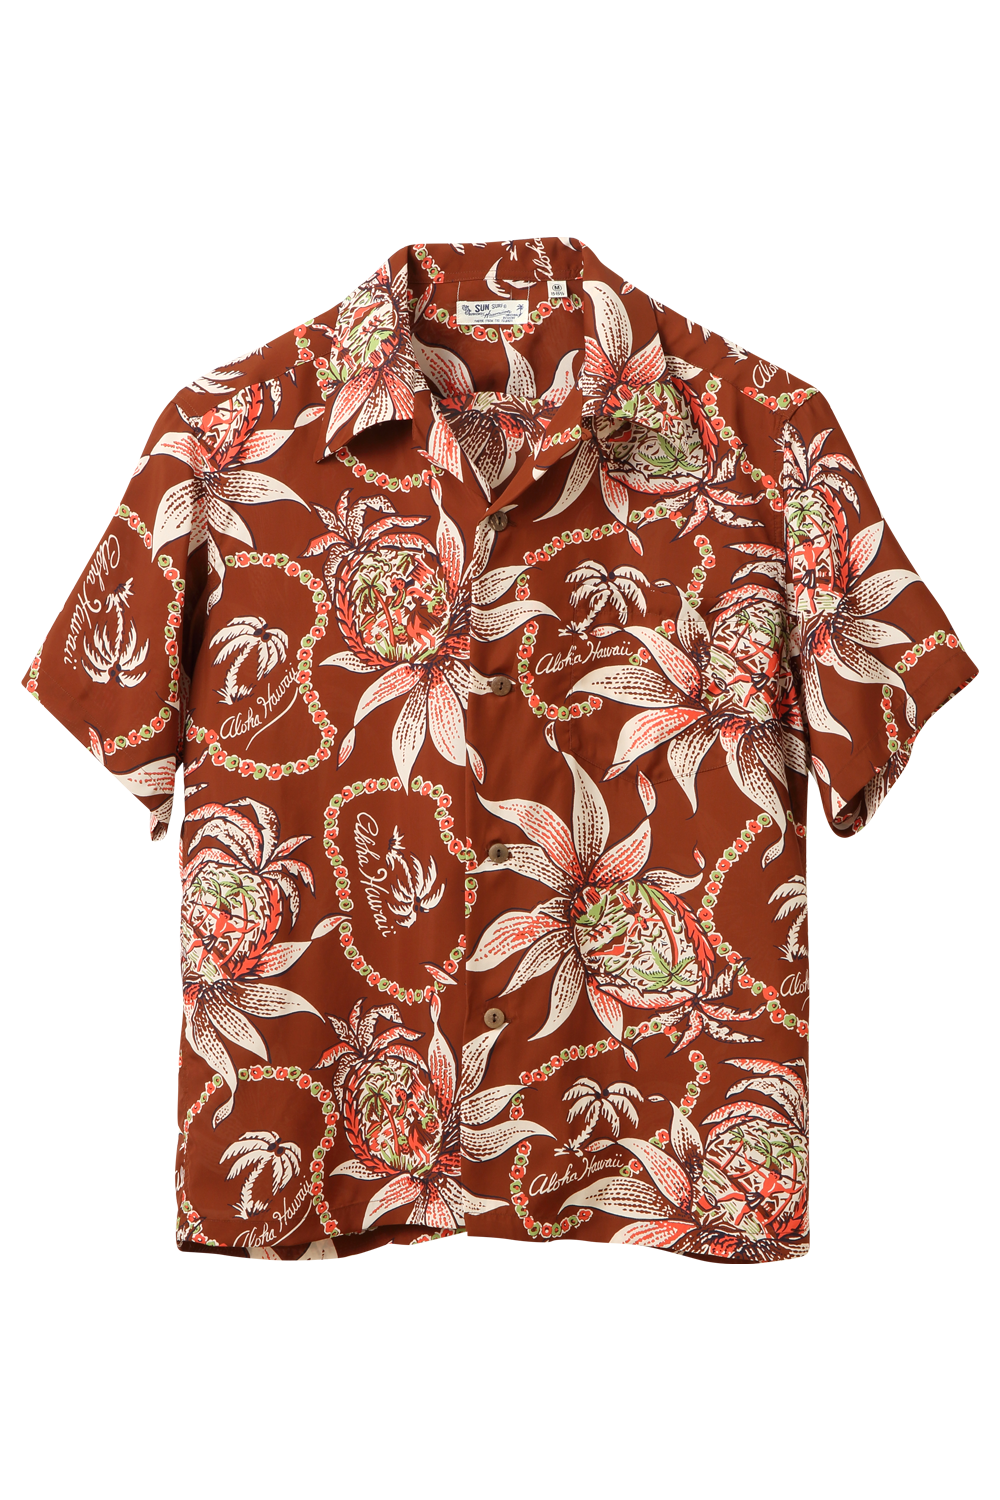 Sun Surf Vintage-Style Hawaiian Shirts 2018 Part 1 | The Fedora Lounge